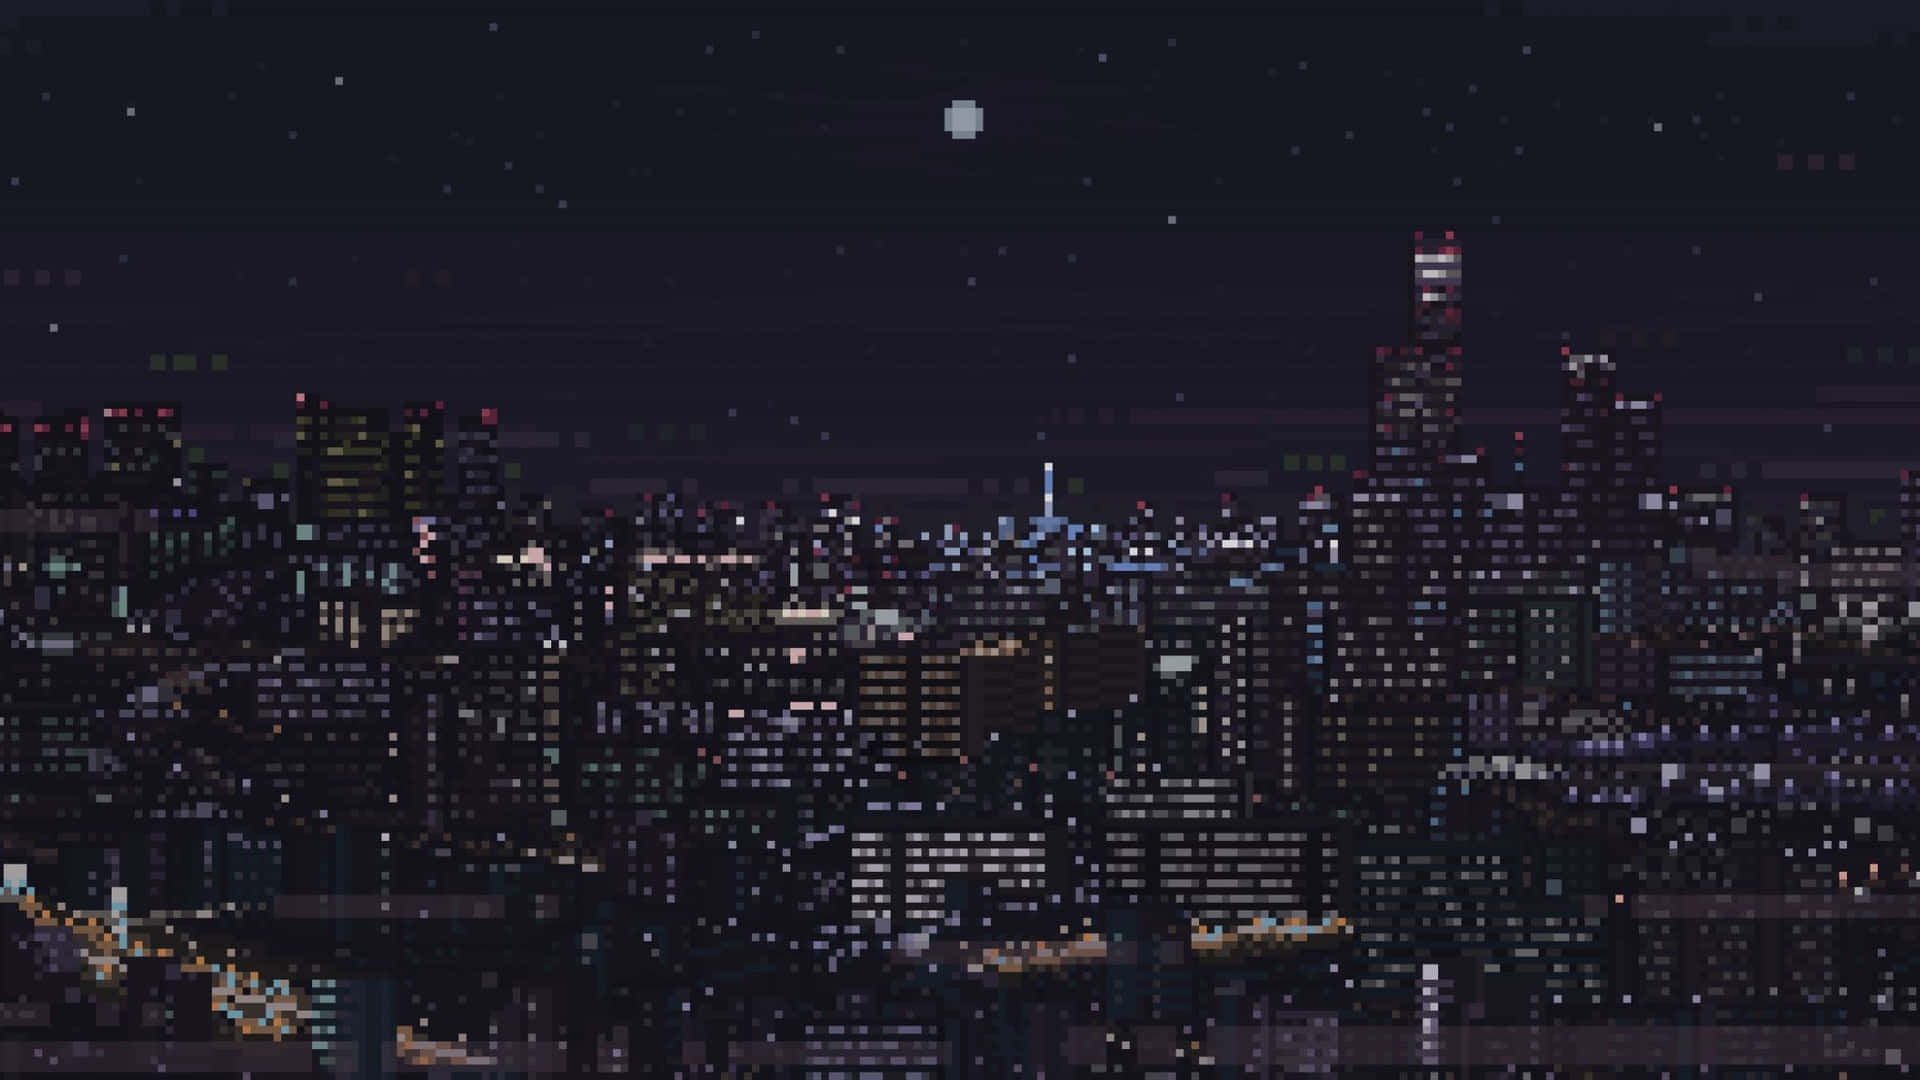 Pixel Art Cityscape At Night Wallpaper